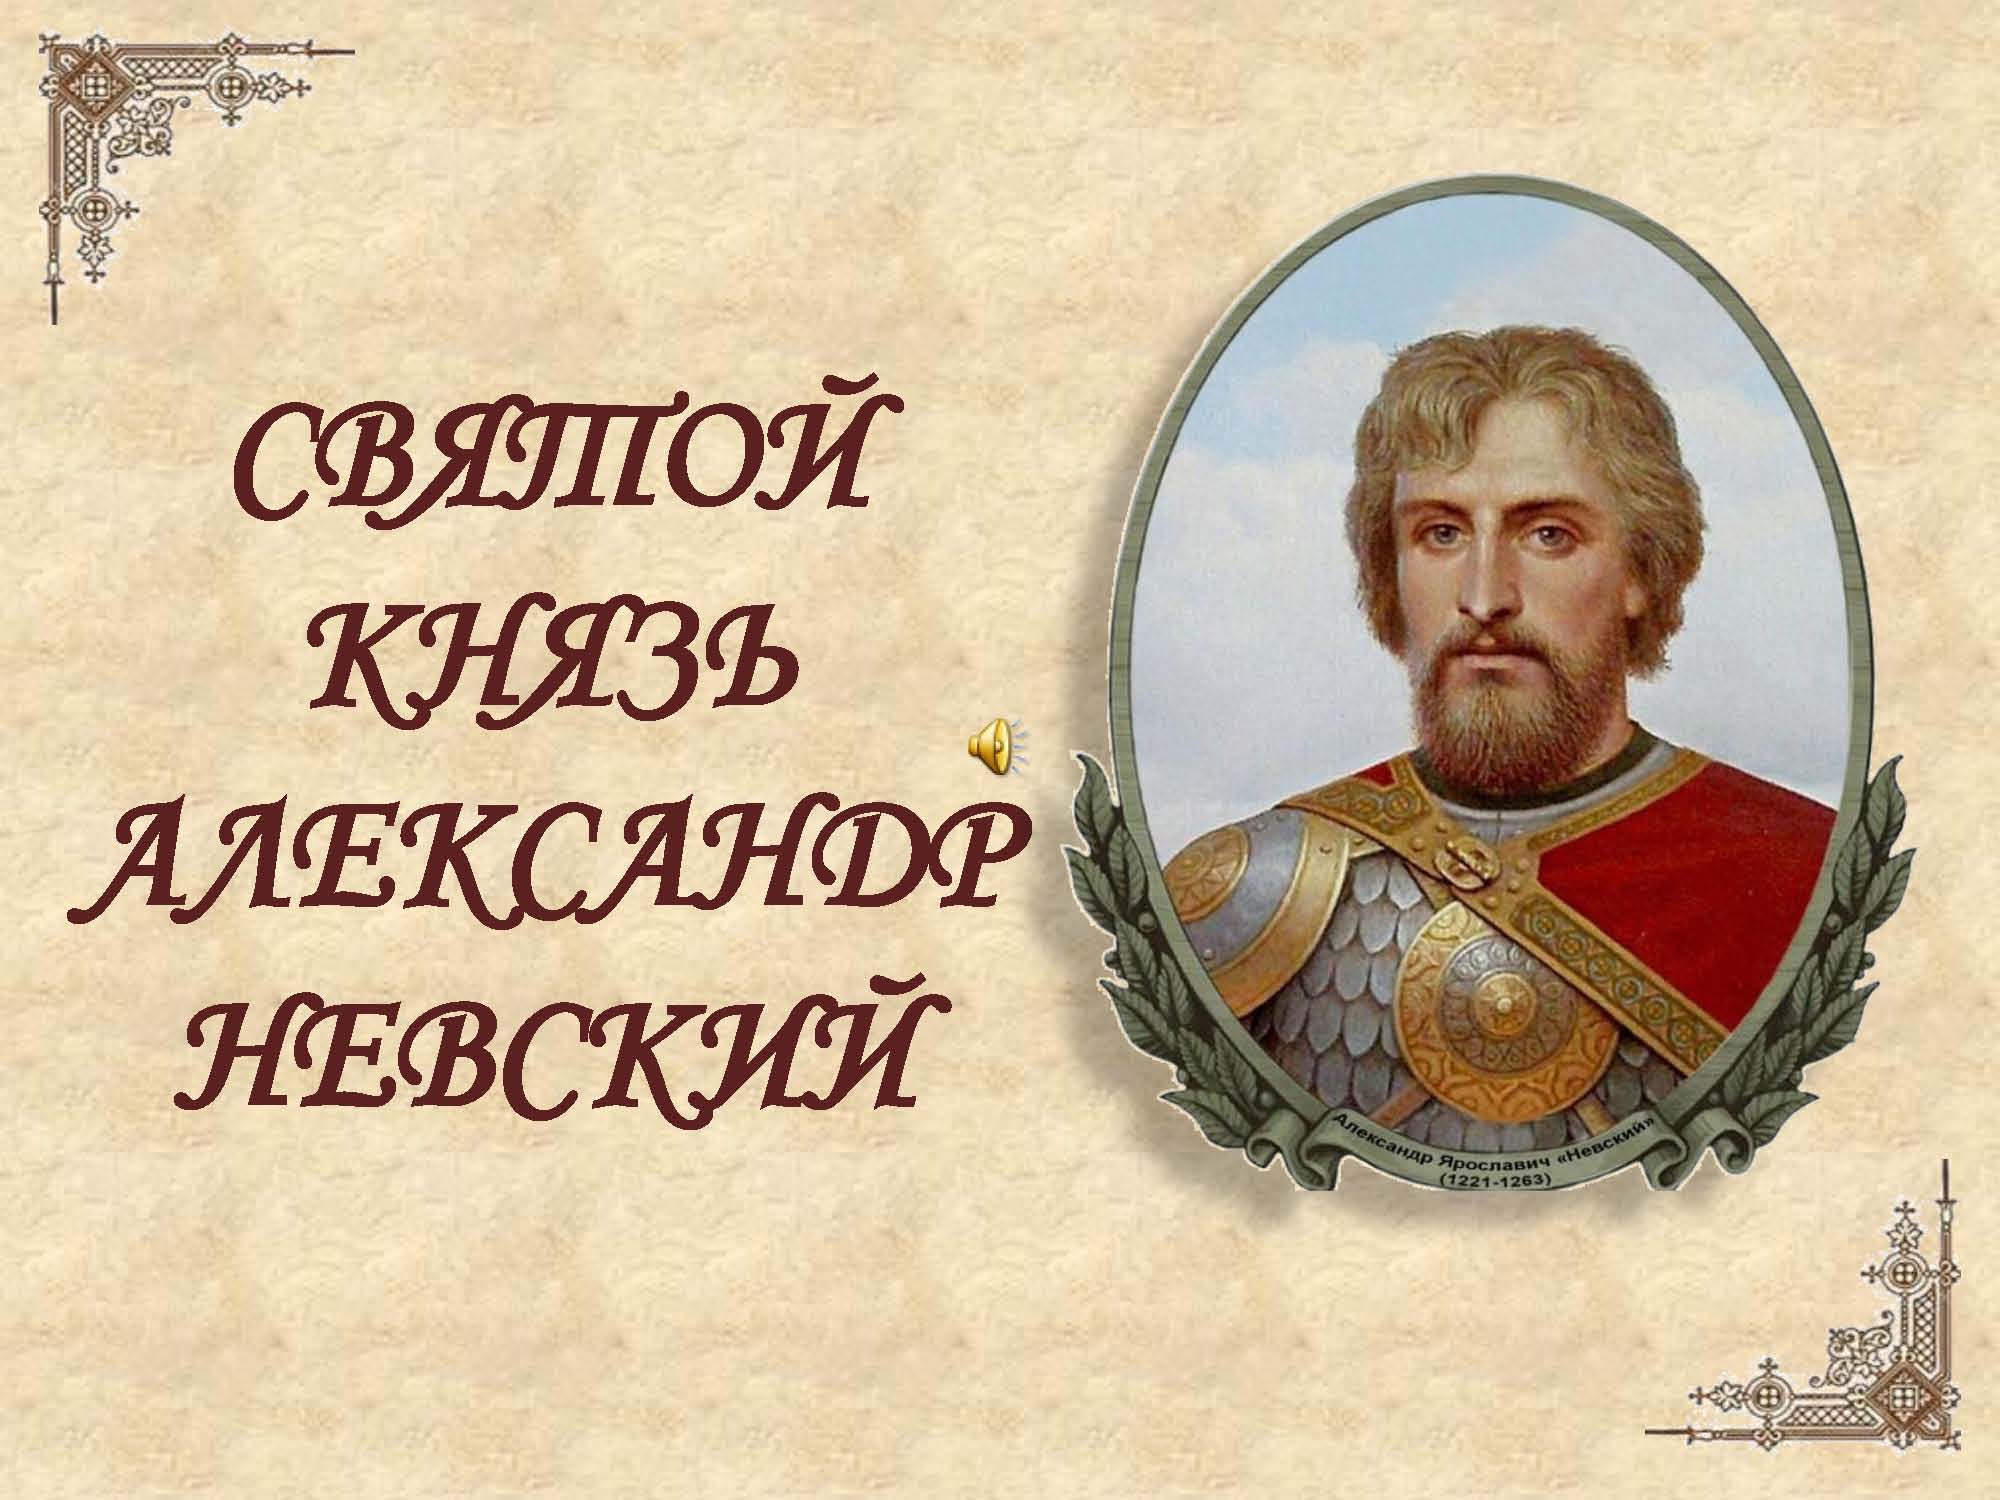 Svyatoj knyaz Aleksandr Nevskij